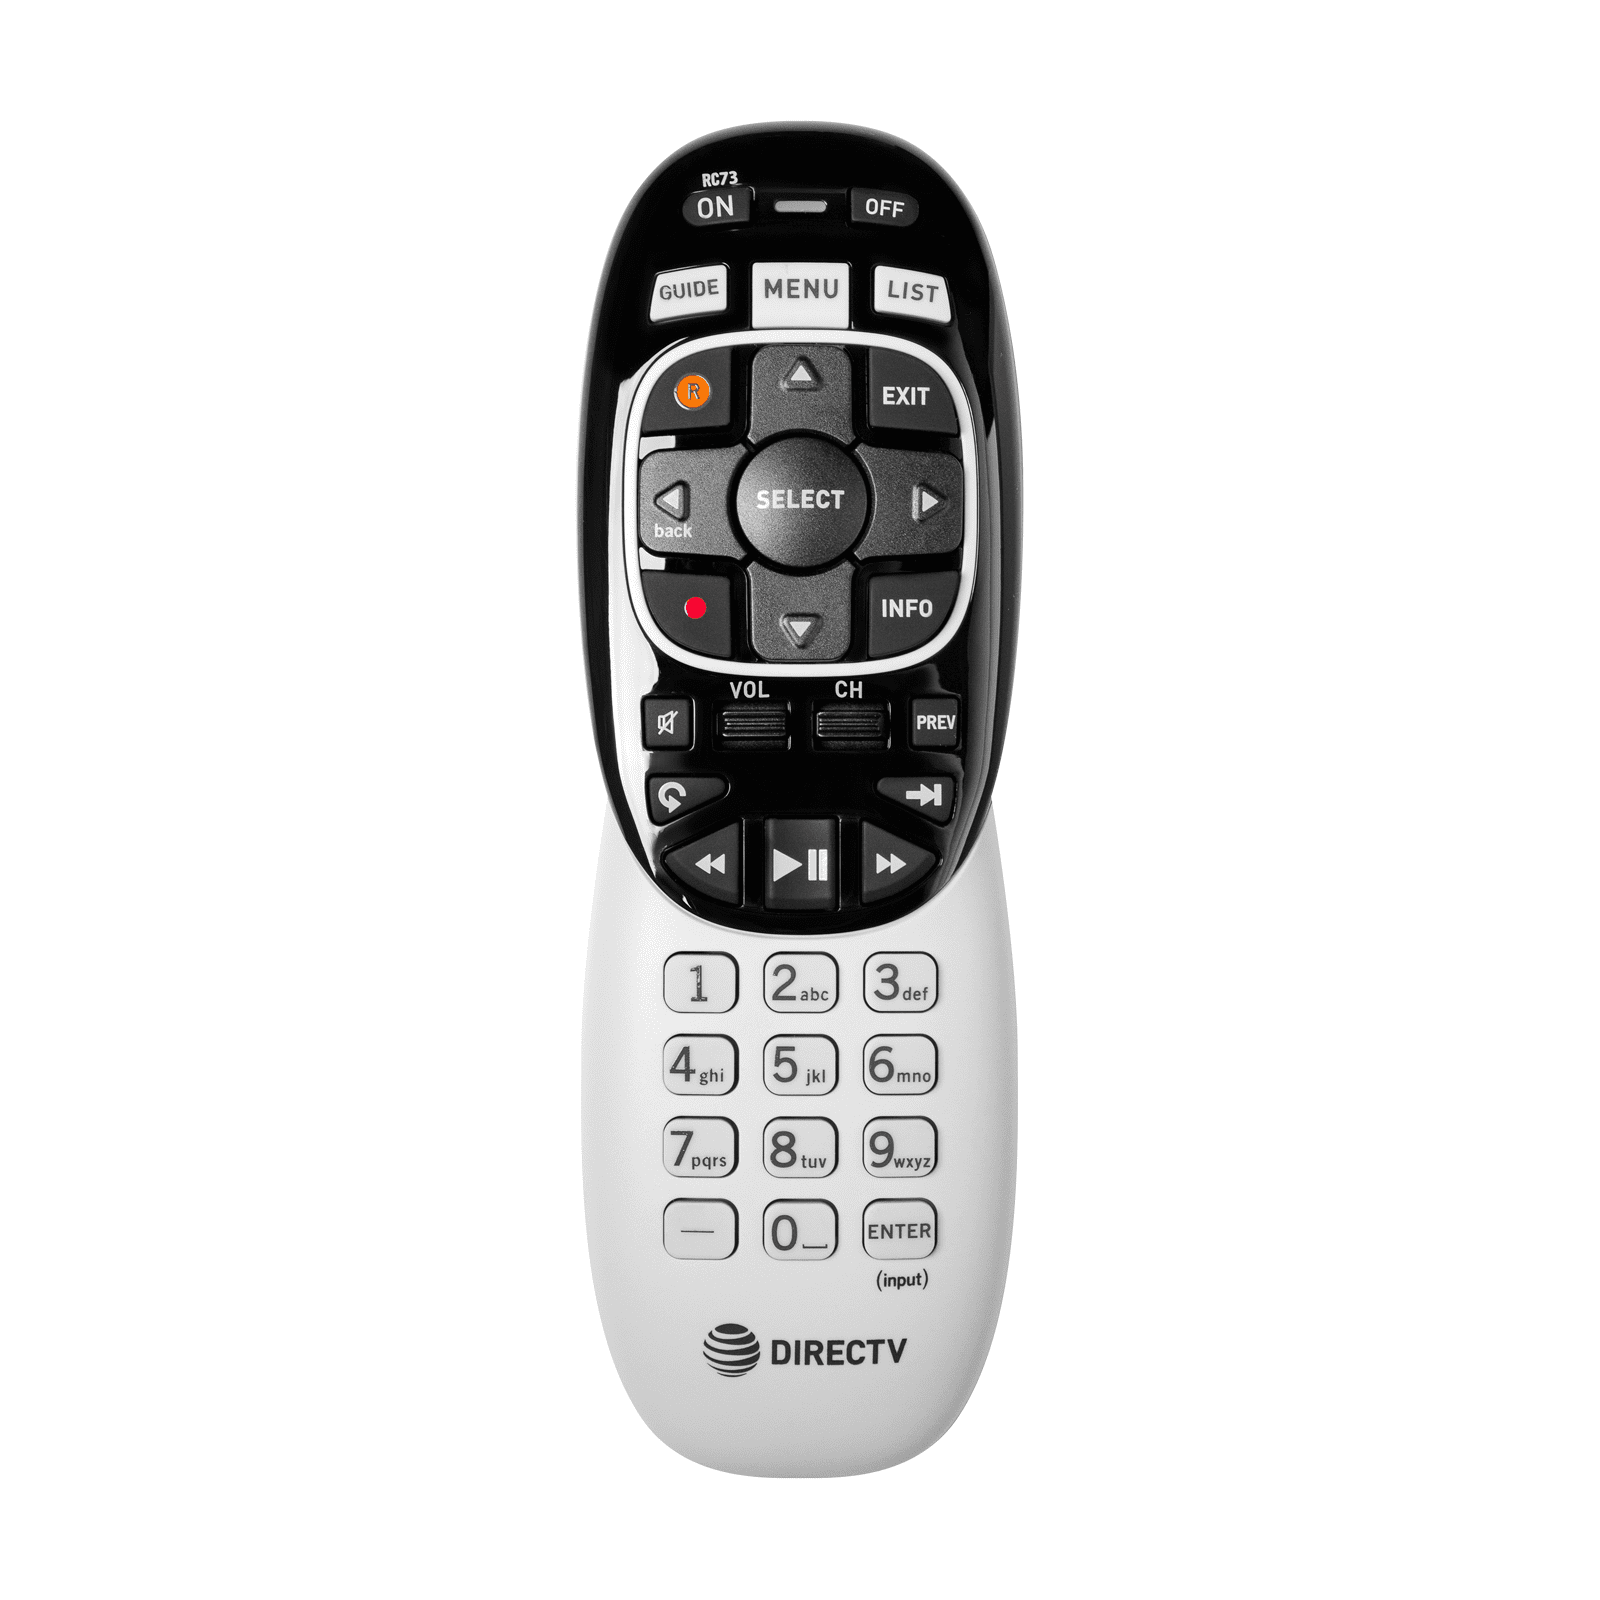 remote control torrent